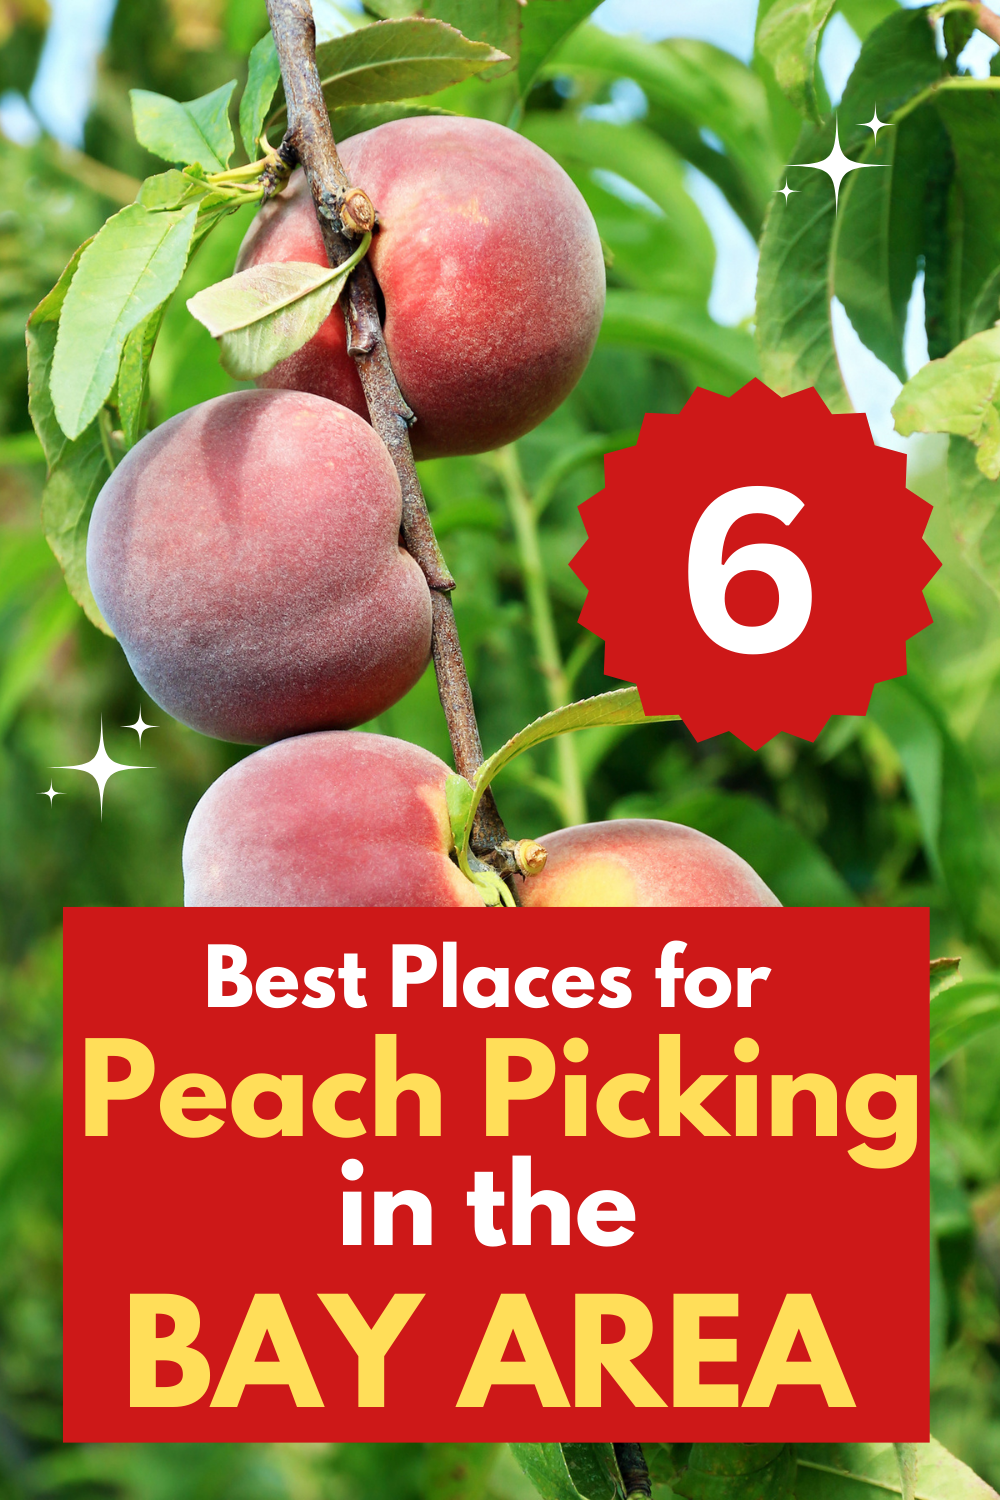 Peach Picking Farms Bay Area